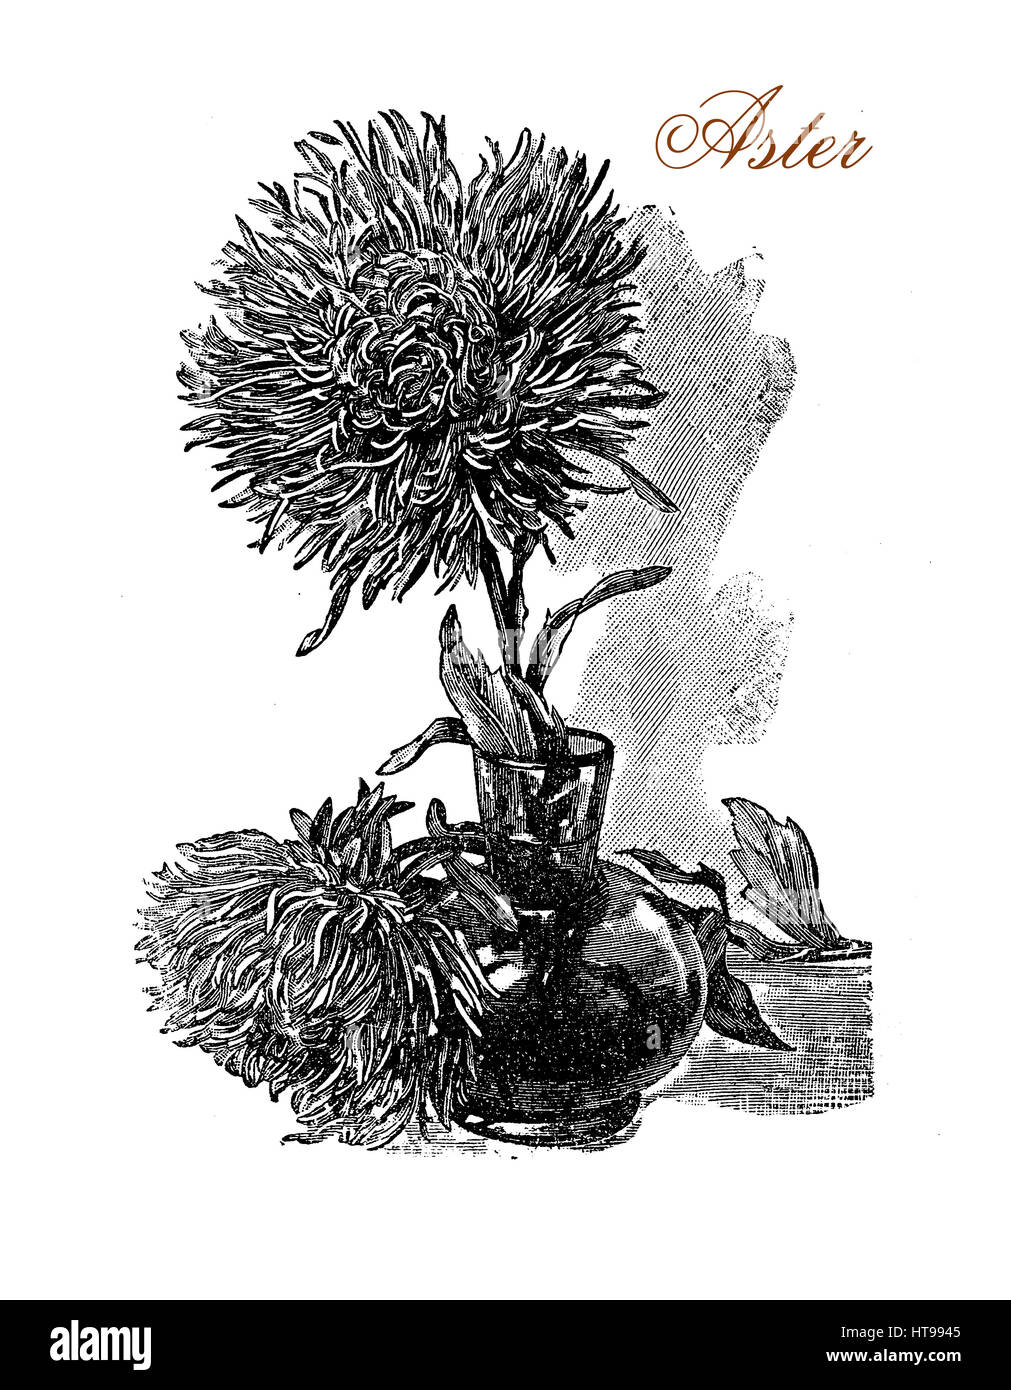 Vintage engraving of beautiful aster flowers in vase. Stock Photo